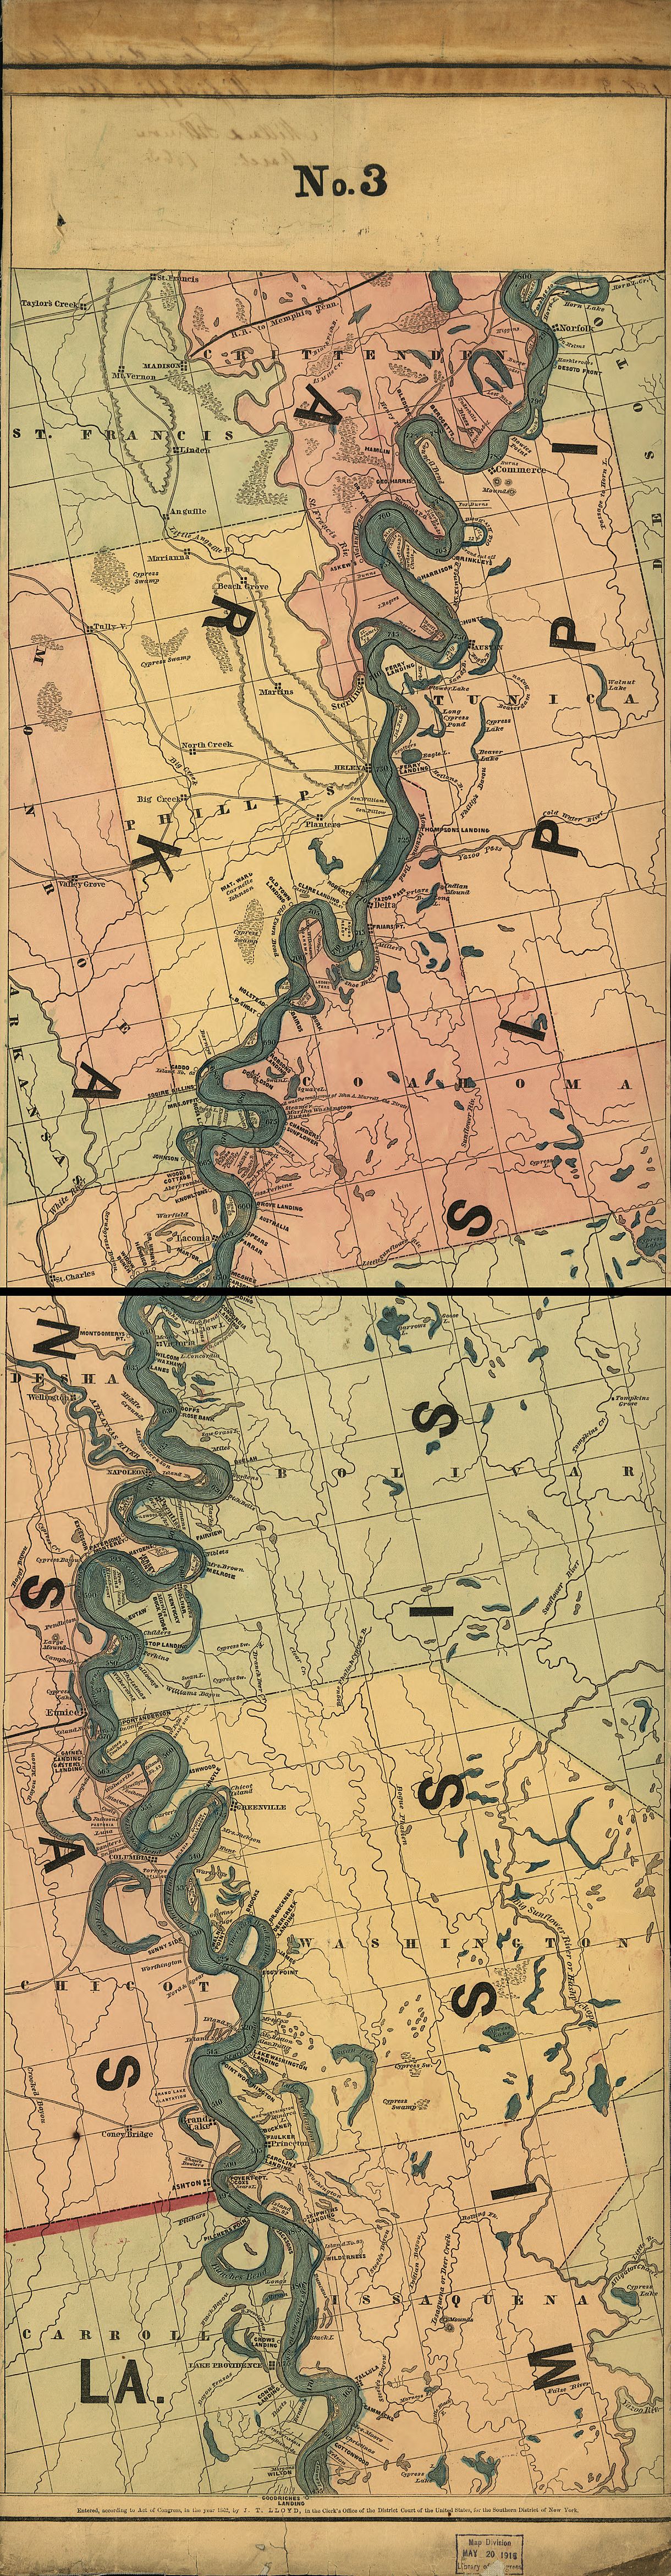 1862 map showing William Perkins' plantation